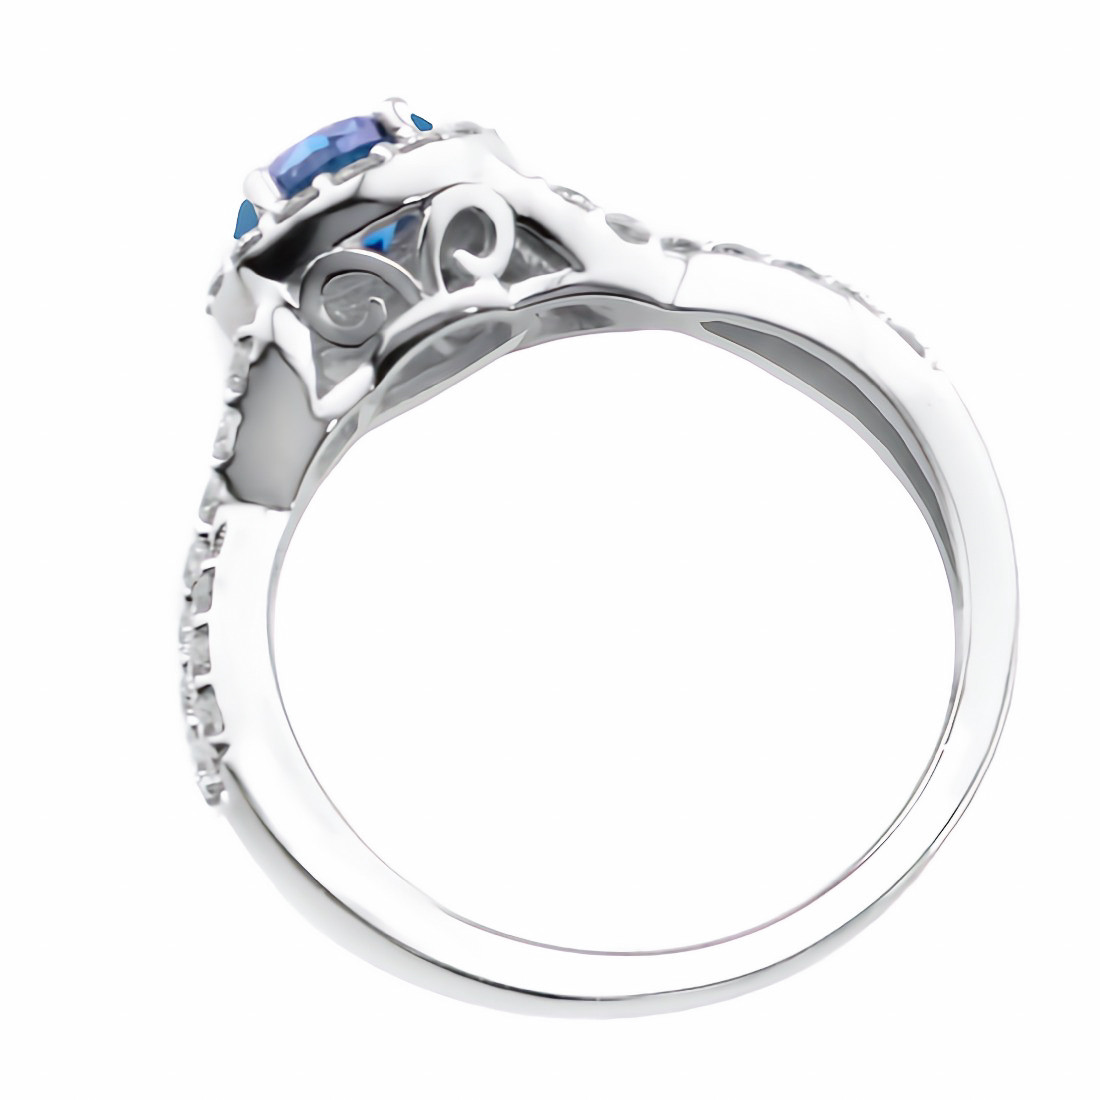 VS1 Fancy Blue Diamond Infinity Halo Engagement Ring